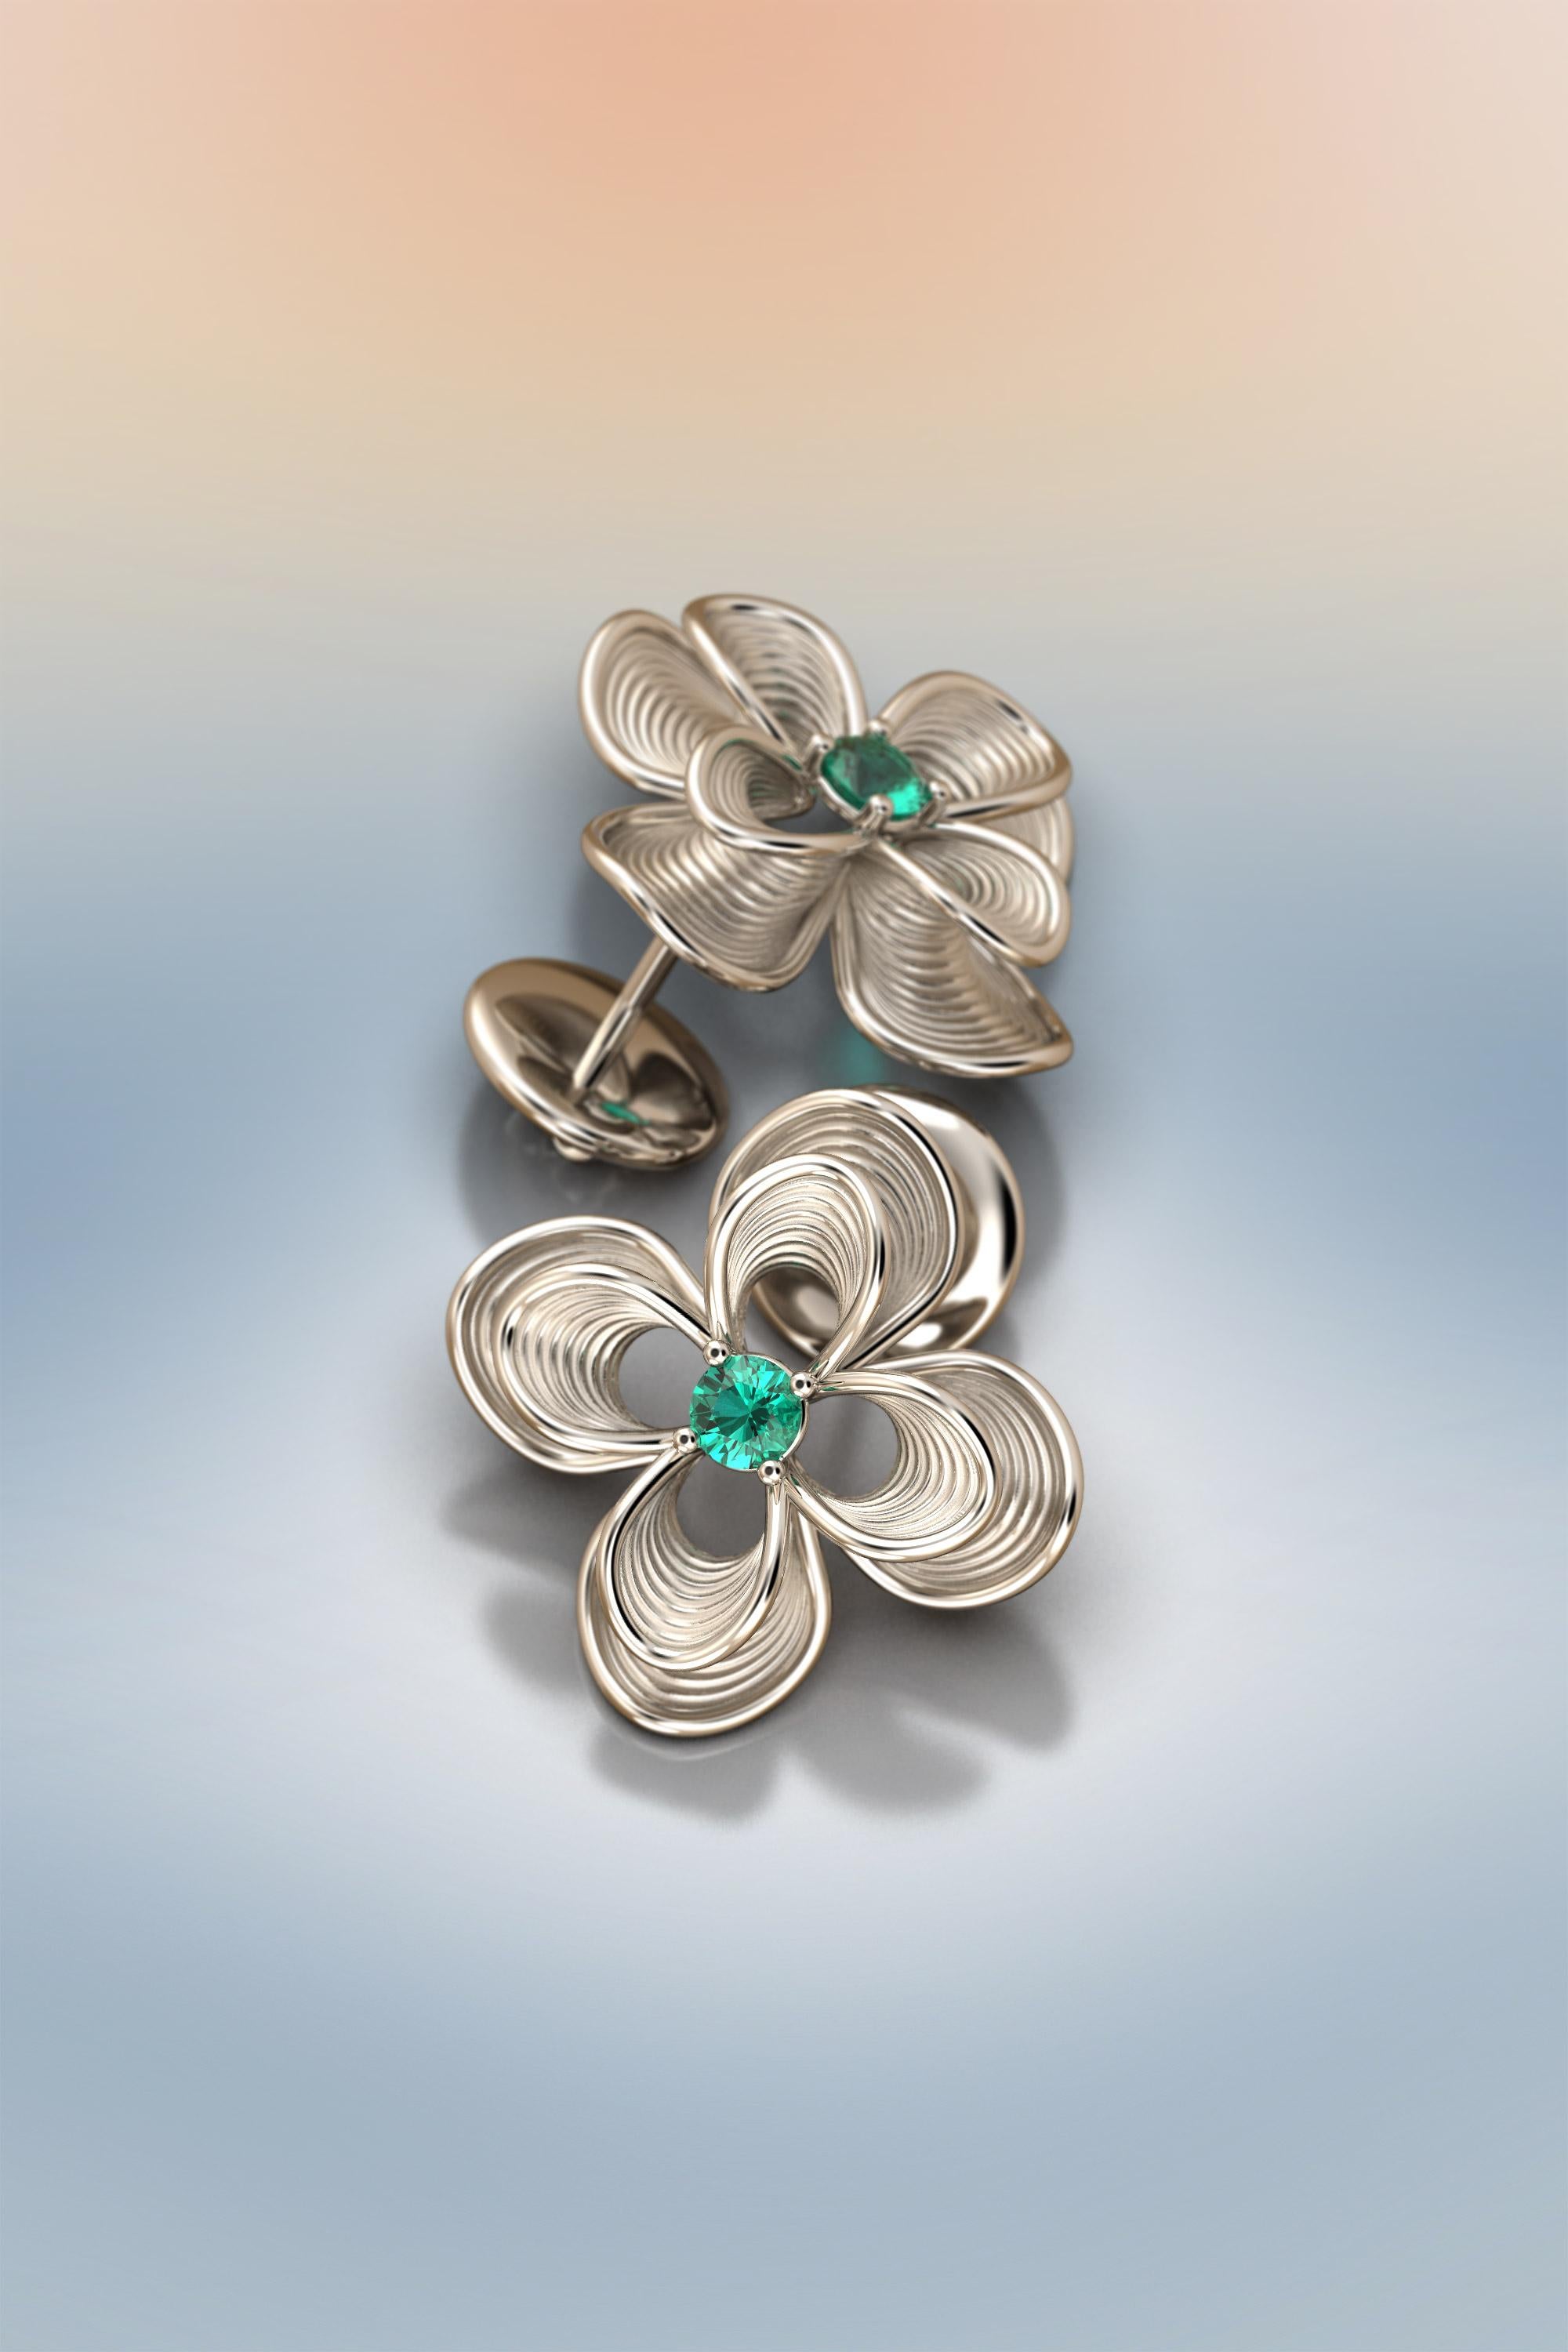 Emerald Stud Earrings in 18k Italian Gold by Oltremare Gioielli For Sale 1